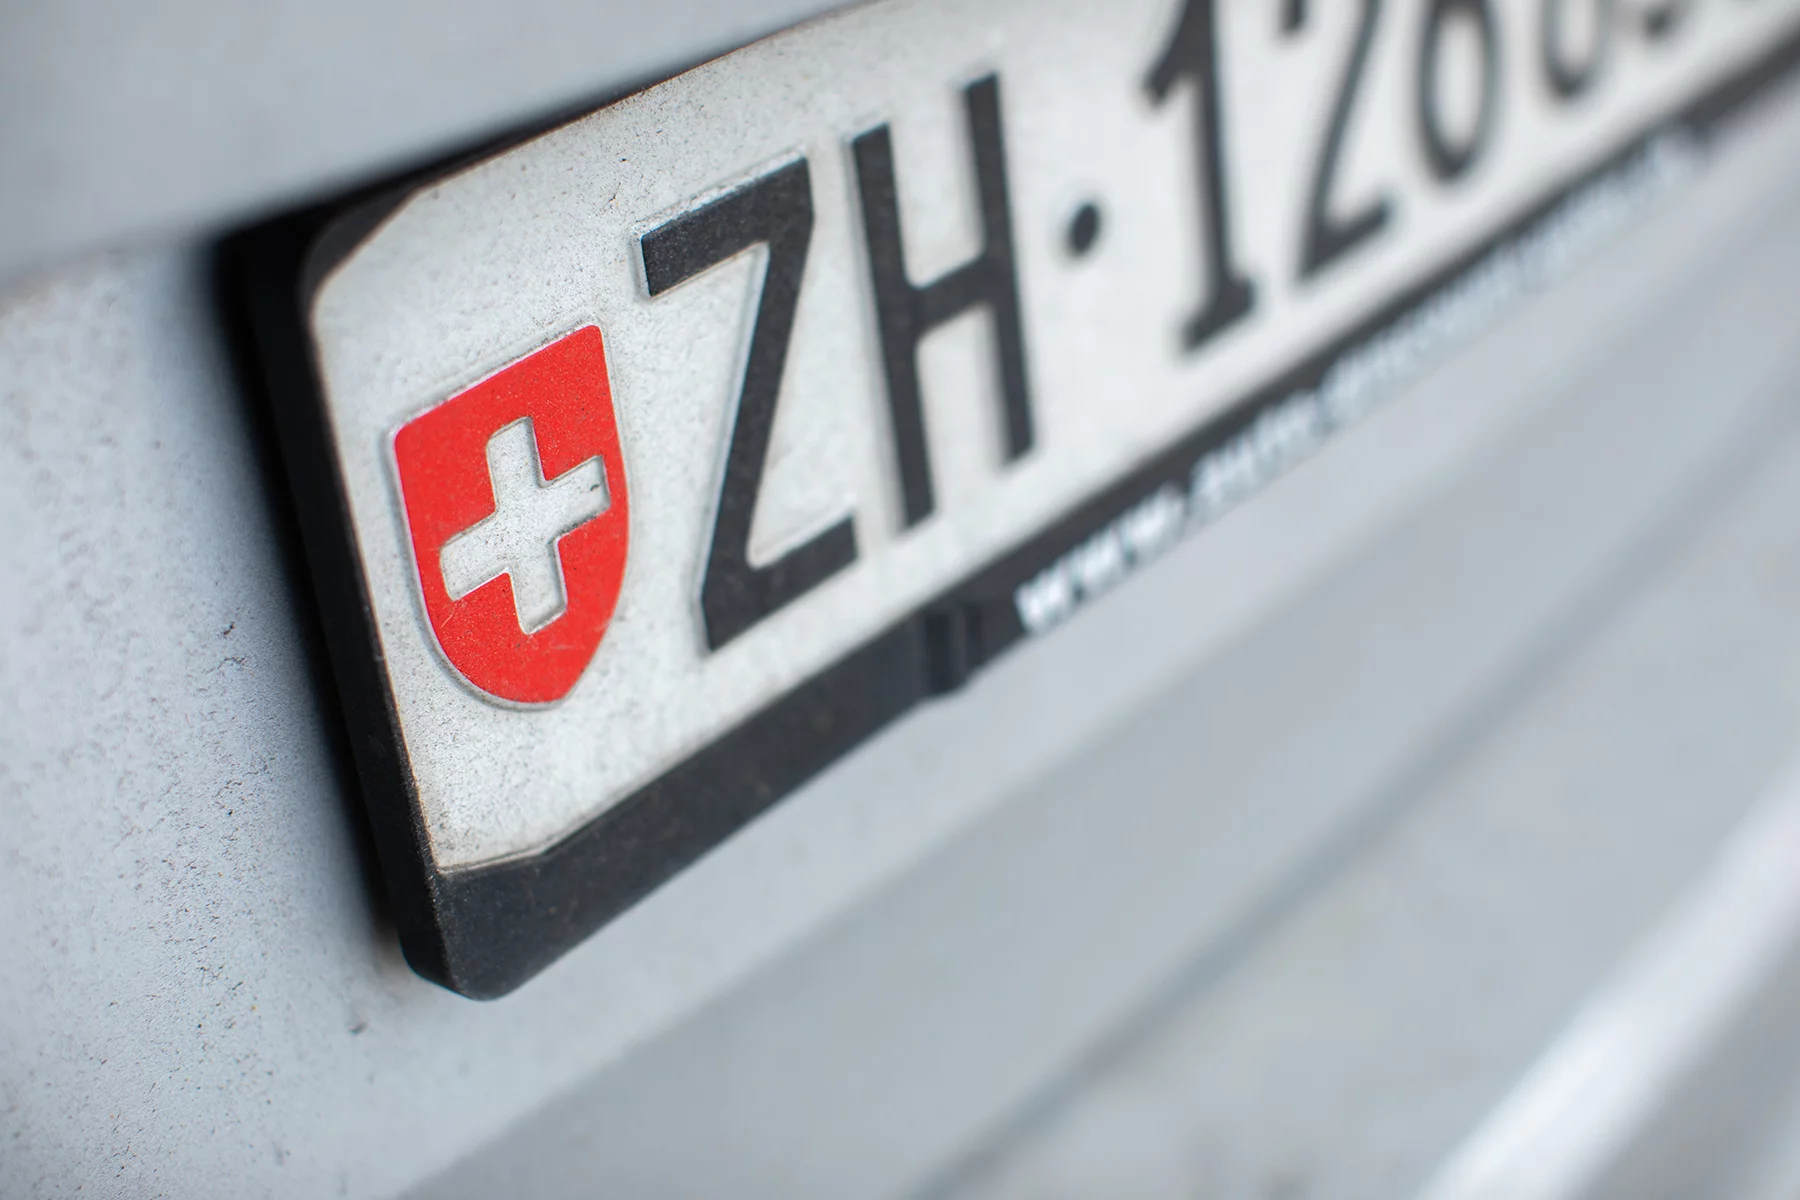 Registering your car address in Switzerland